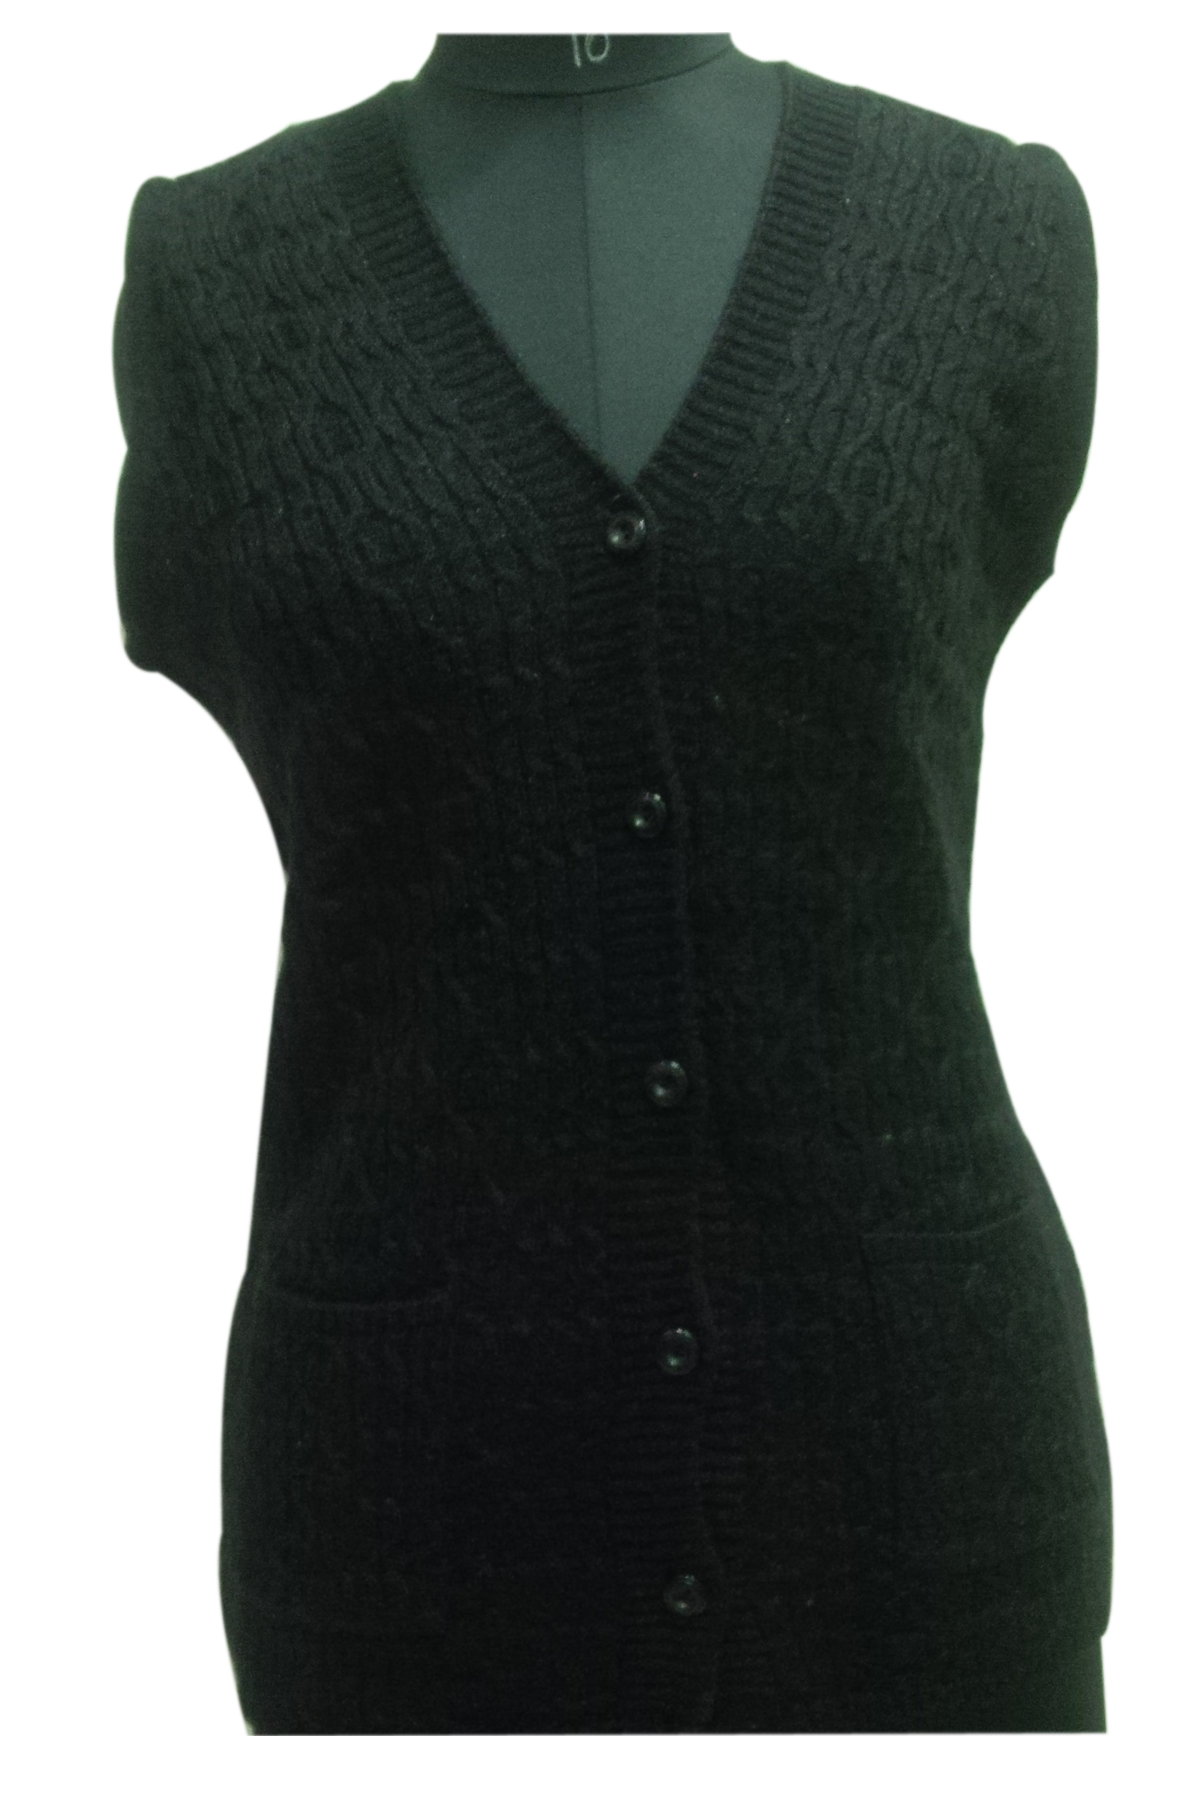 Half Ladies Sweater [Koti] Free Size in Black